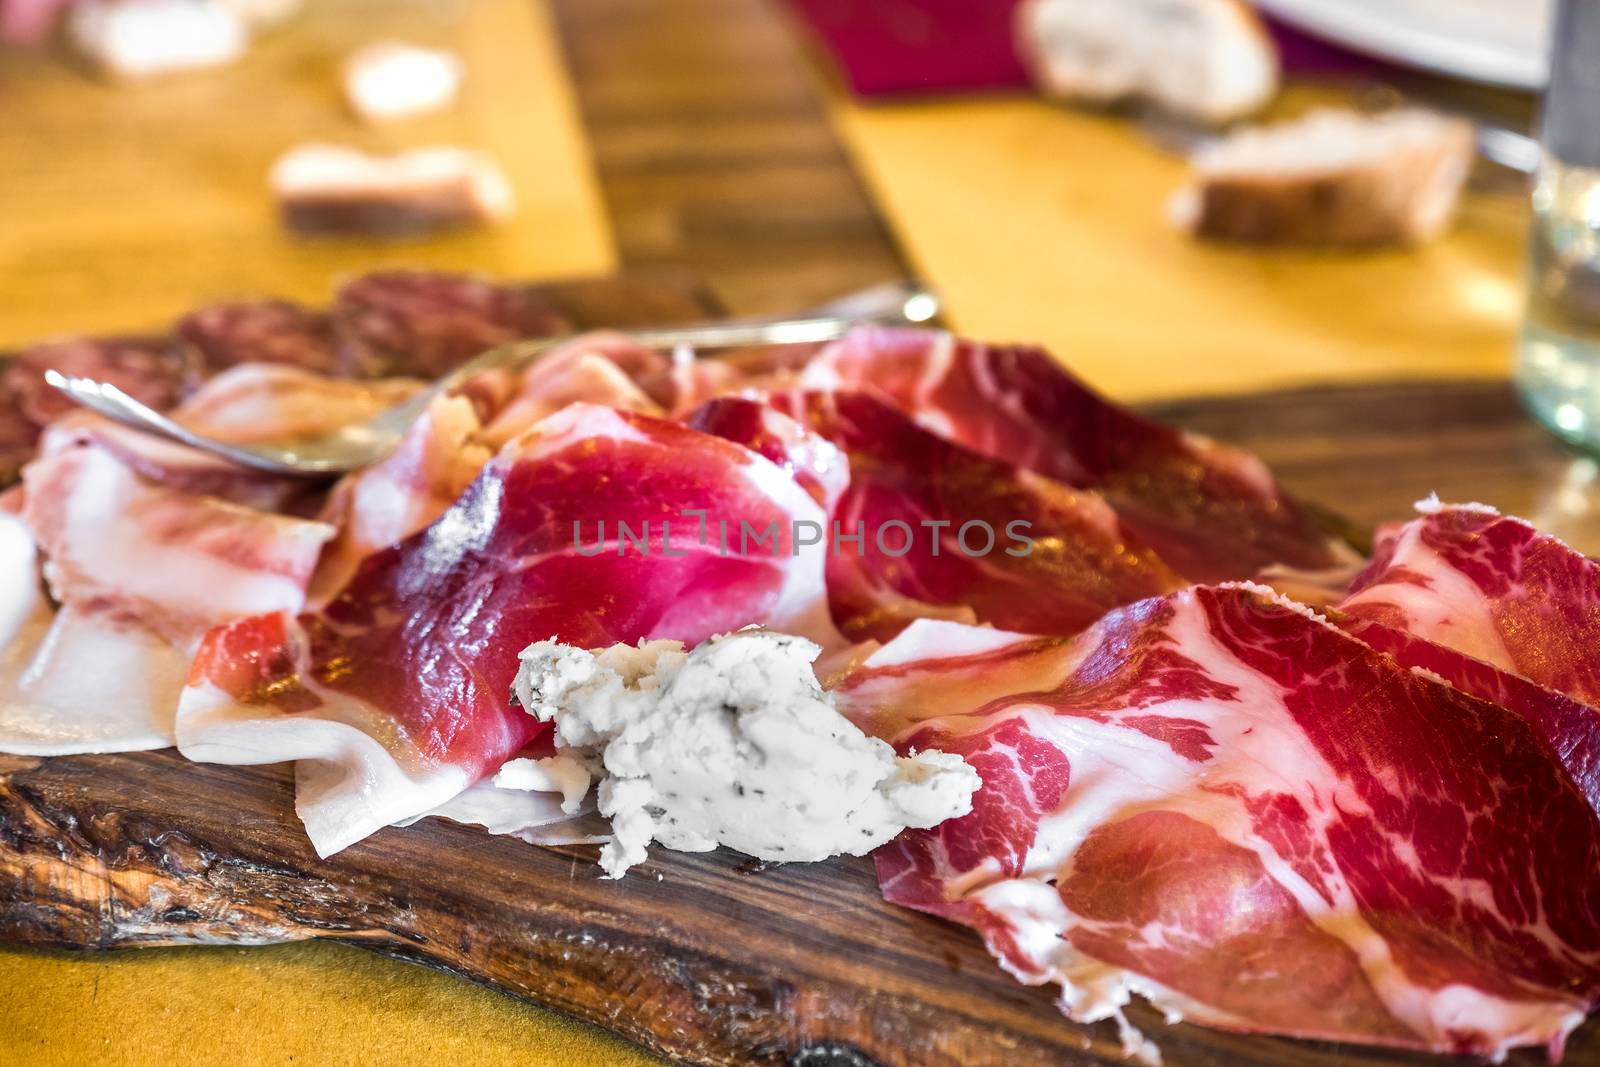 chopping board cold cuts from Parma tagliere di affettati Parma Italy by LucaLorenzelli